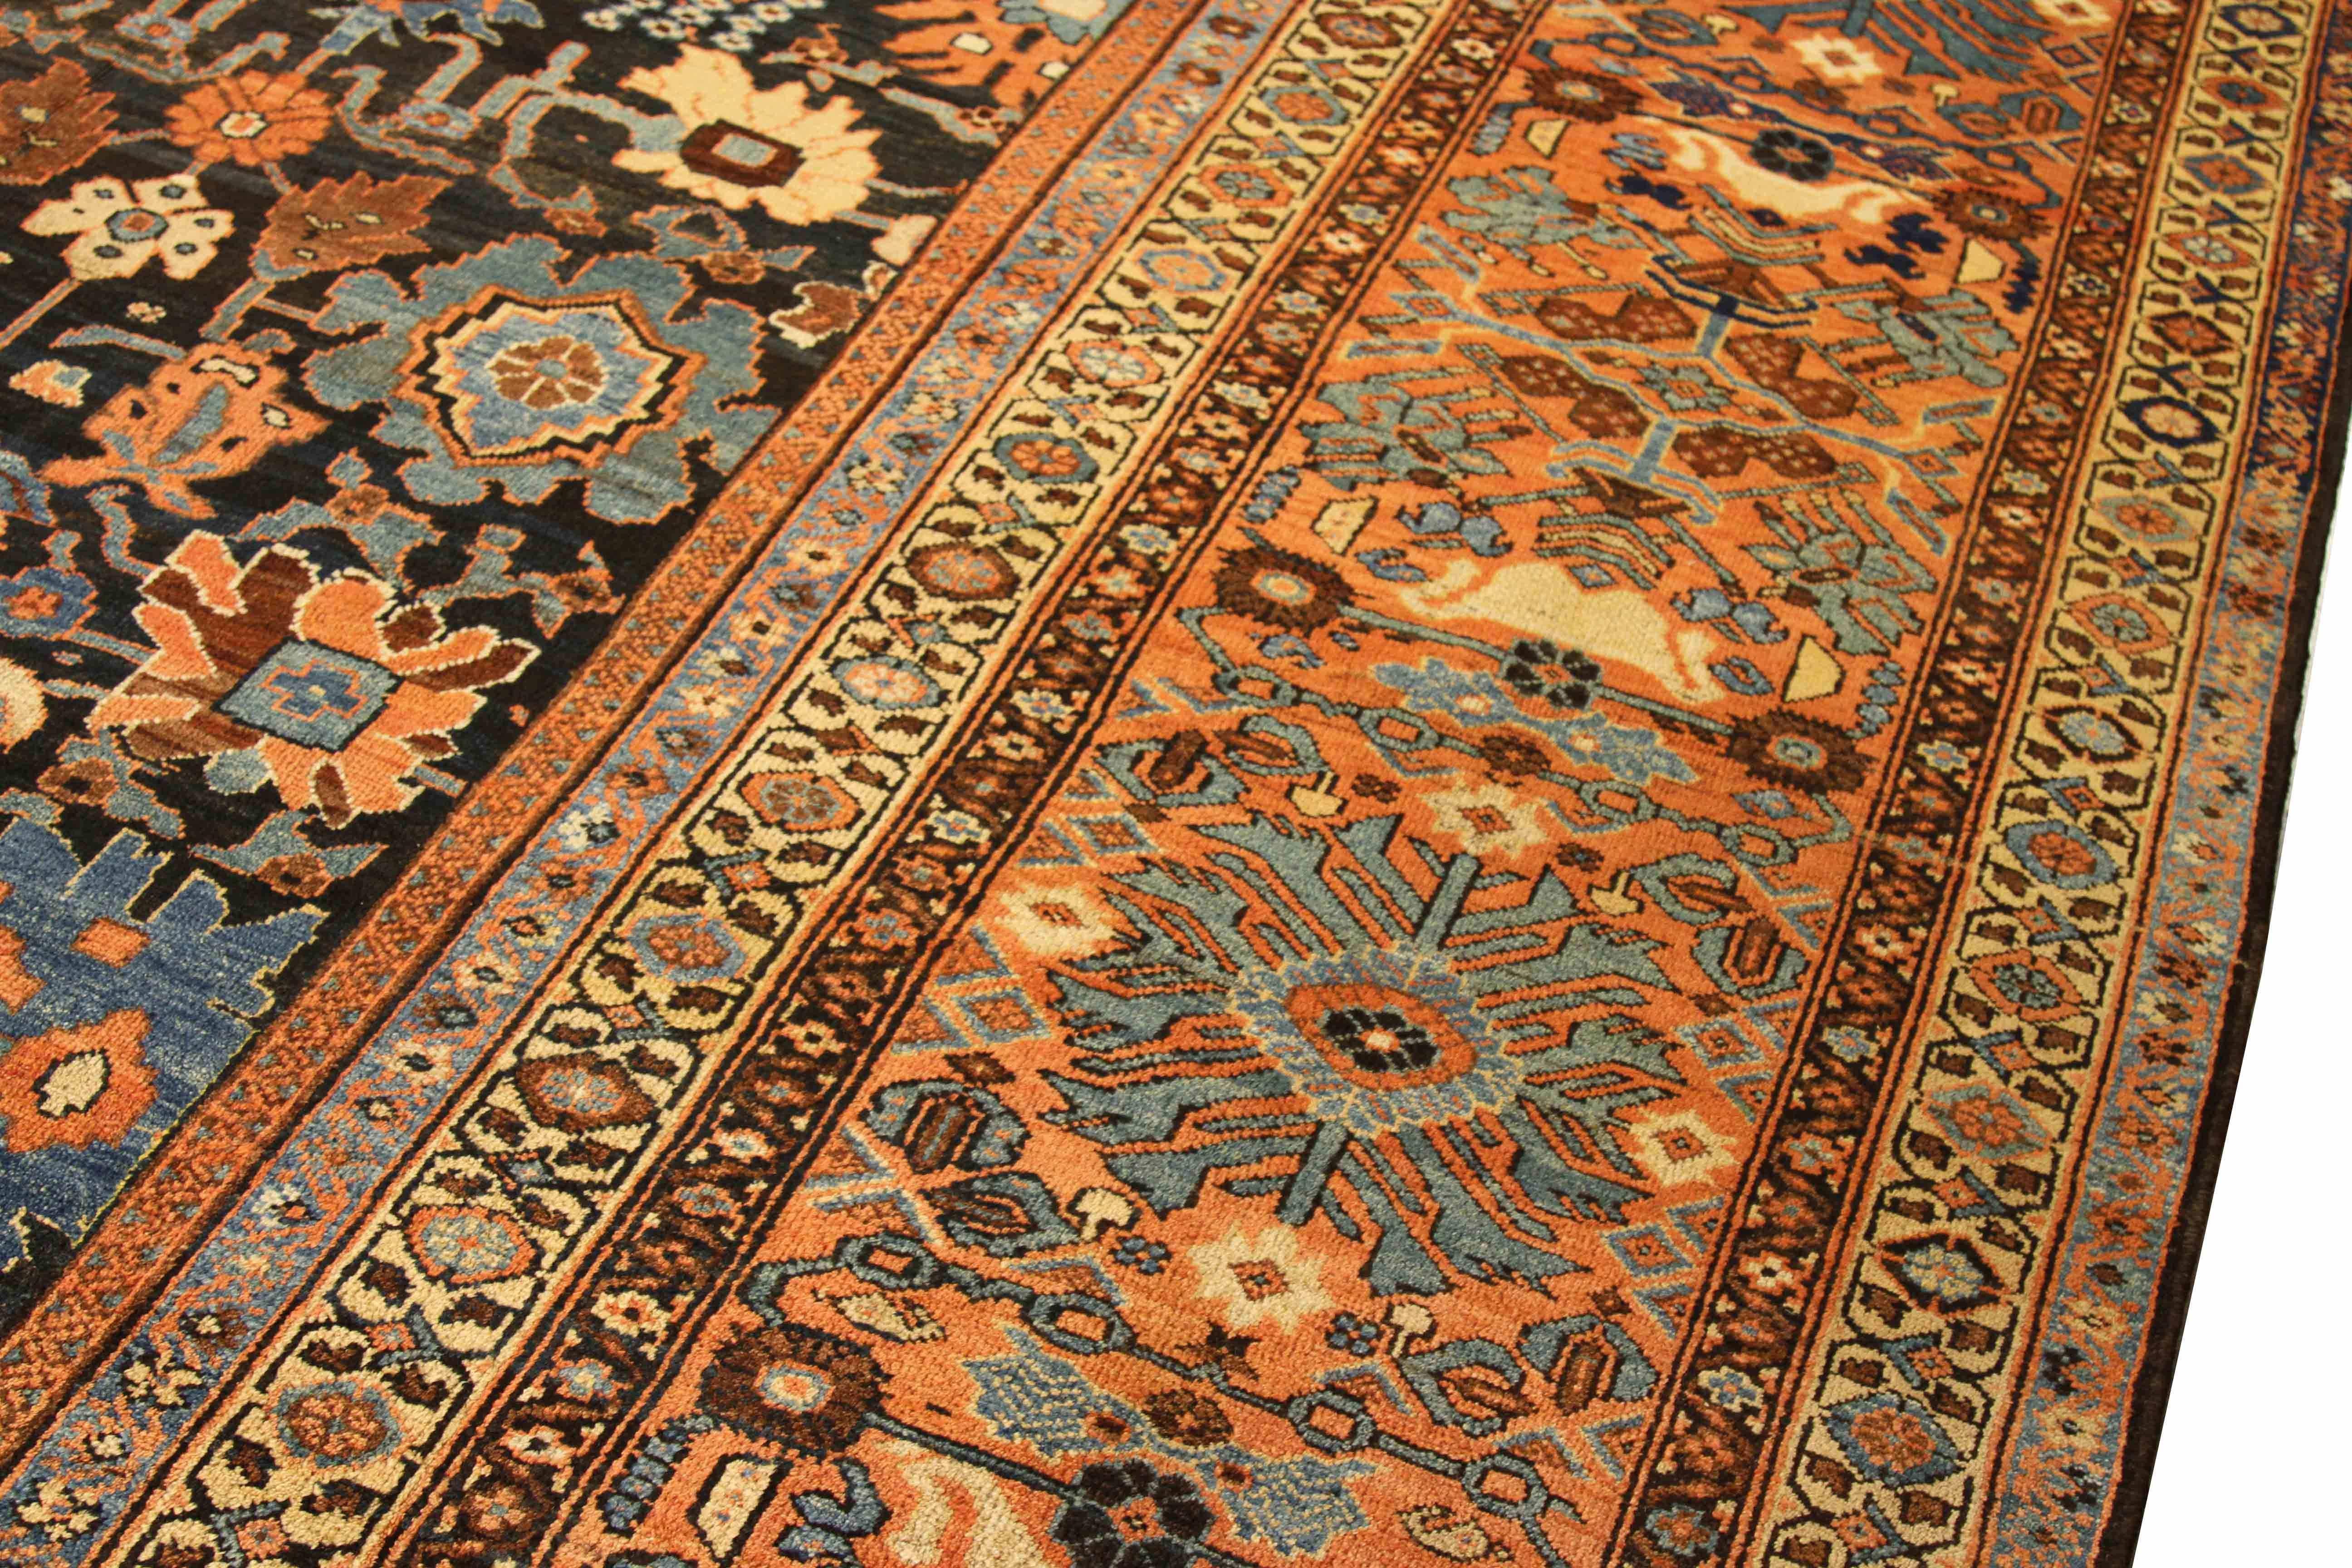 Antique Persian Area Rug Sultanabad Design In Excellent Condition For Sale In Dallas, TX